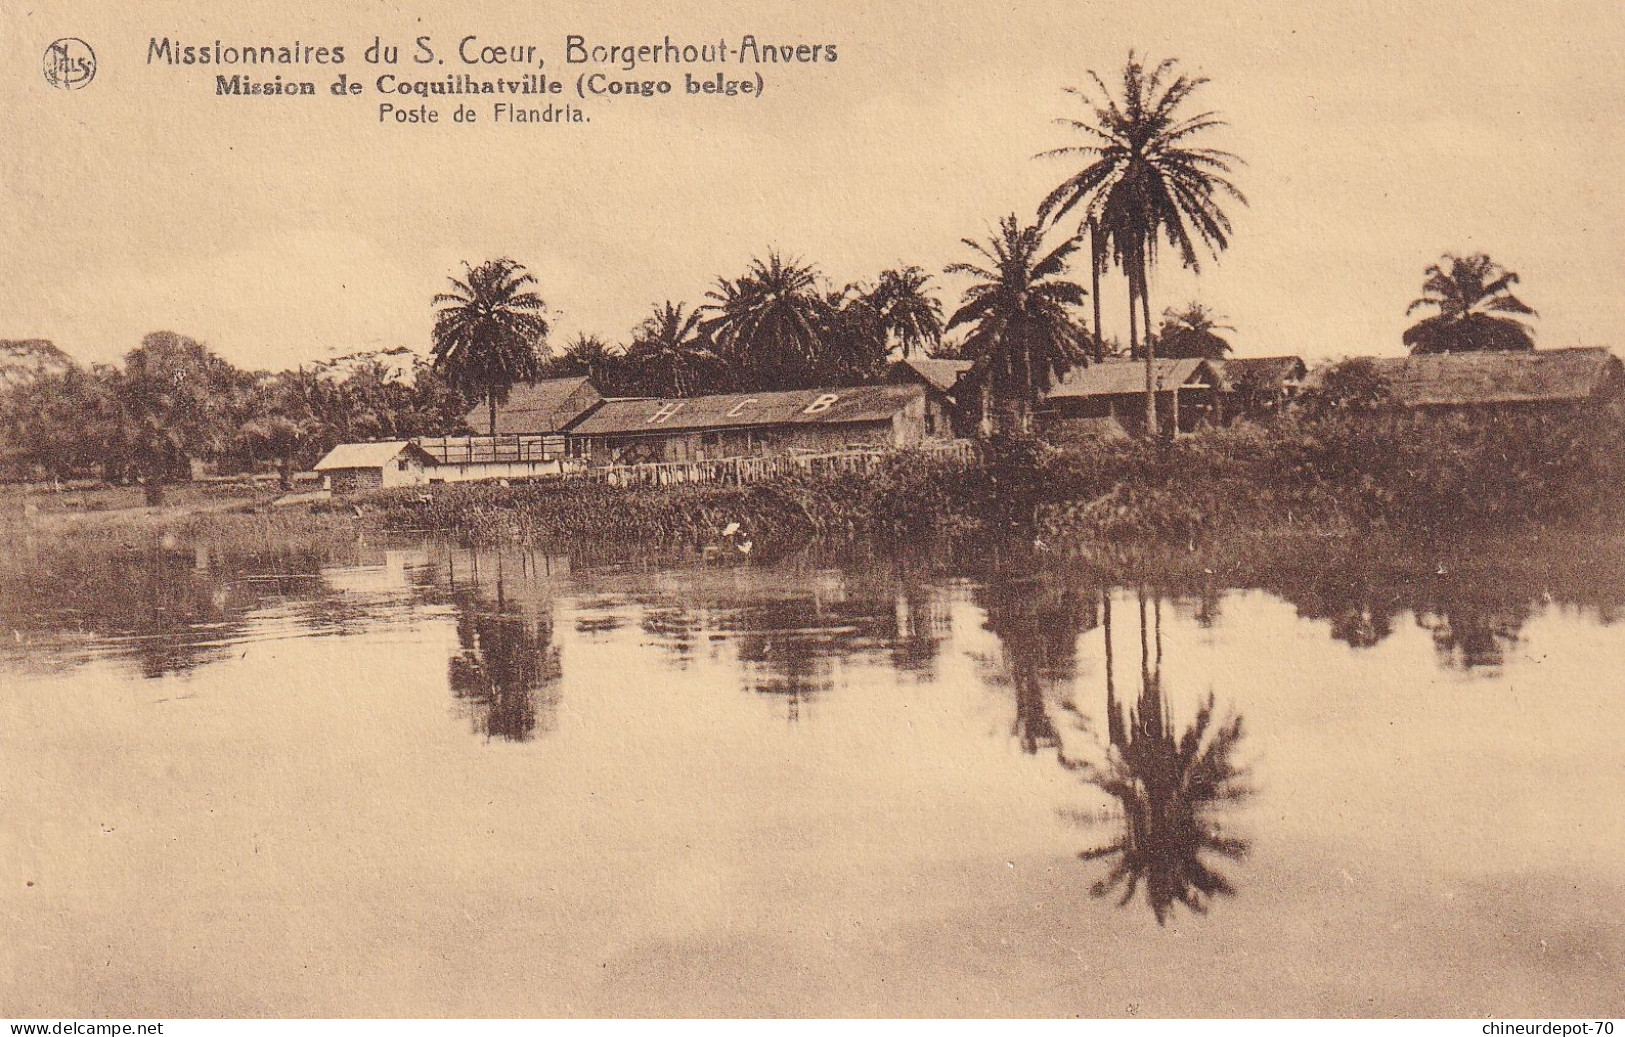 Mission De Coquilhatville Congo Belge Poste De Flandria - Belgian Congo